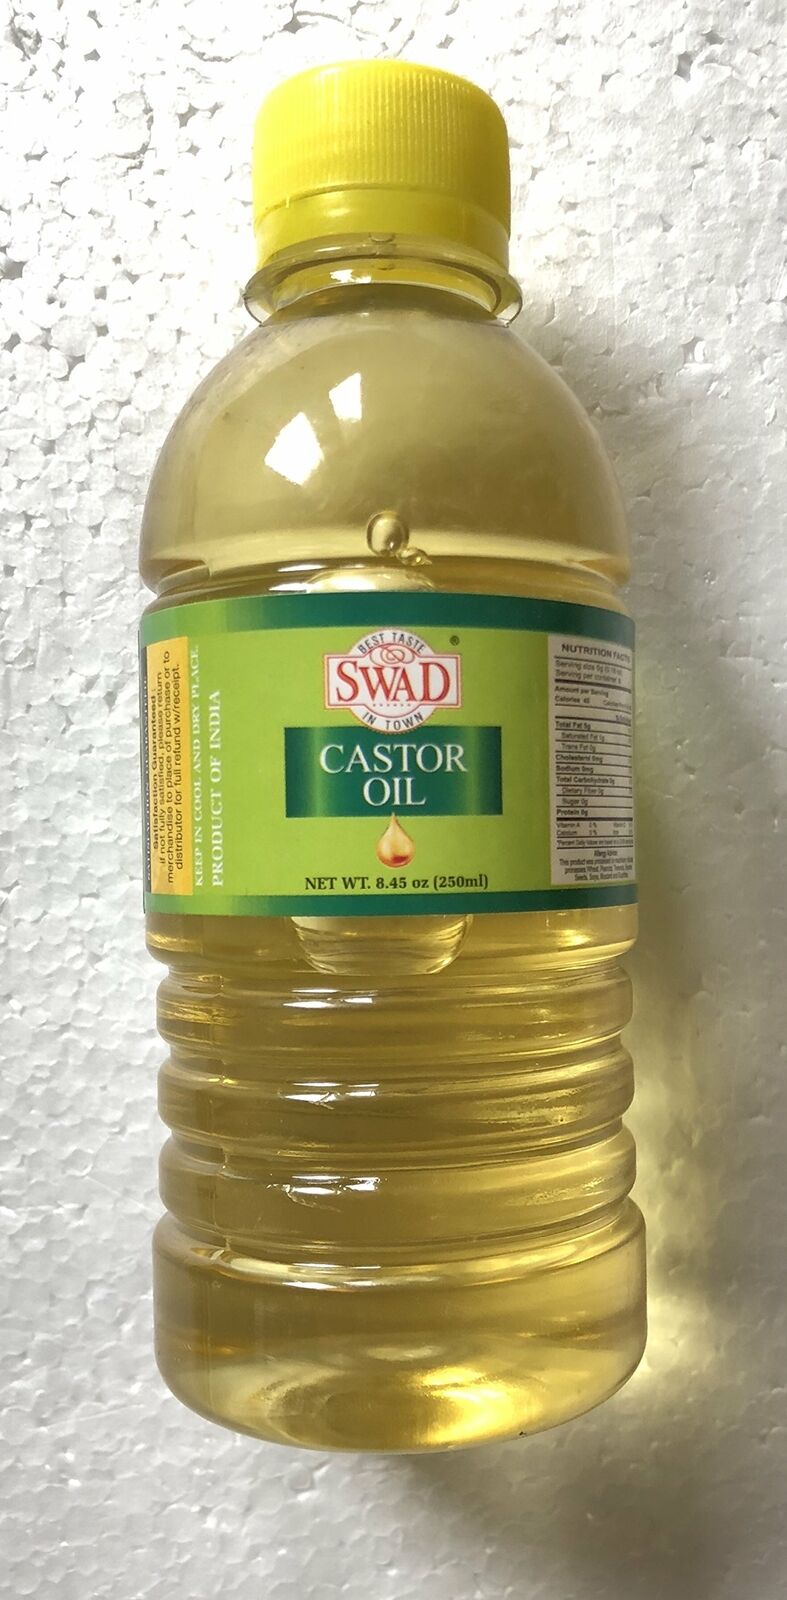 Swad Castor Oil. 8.45oz